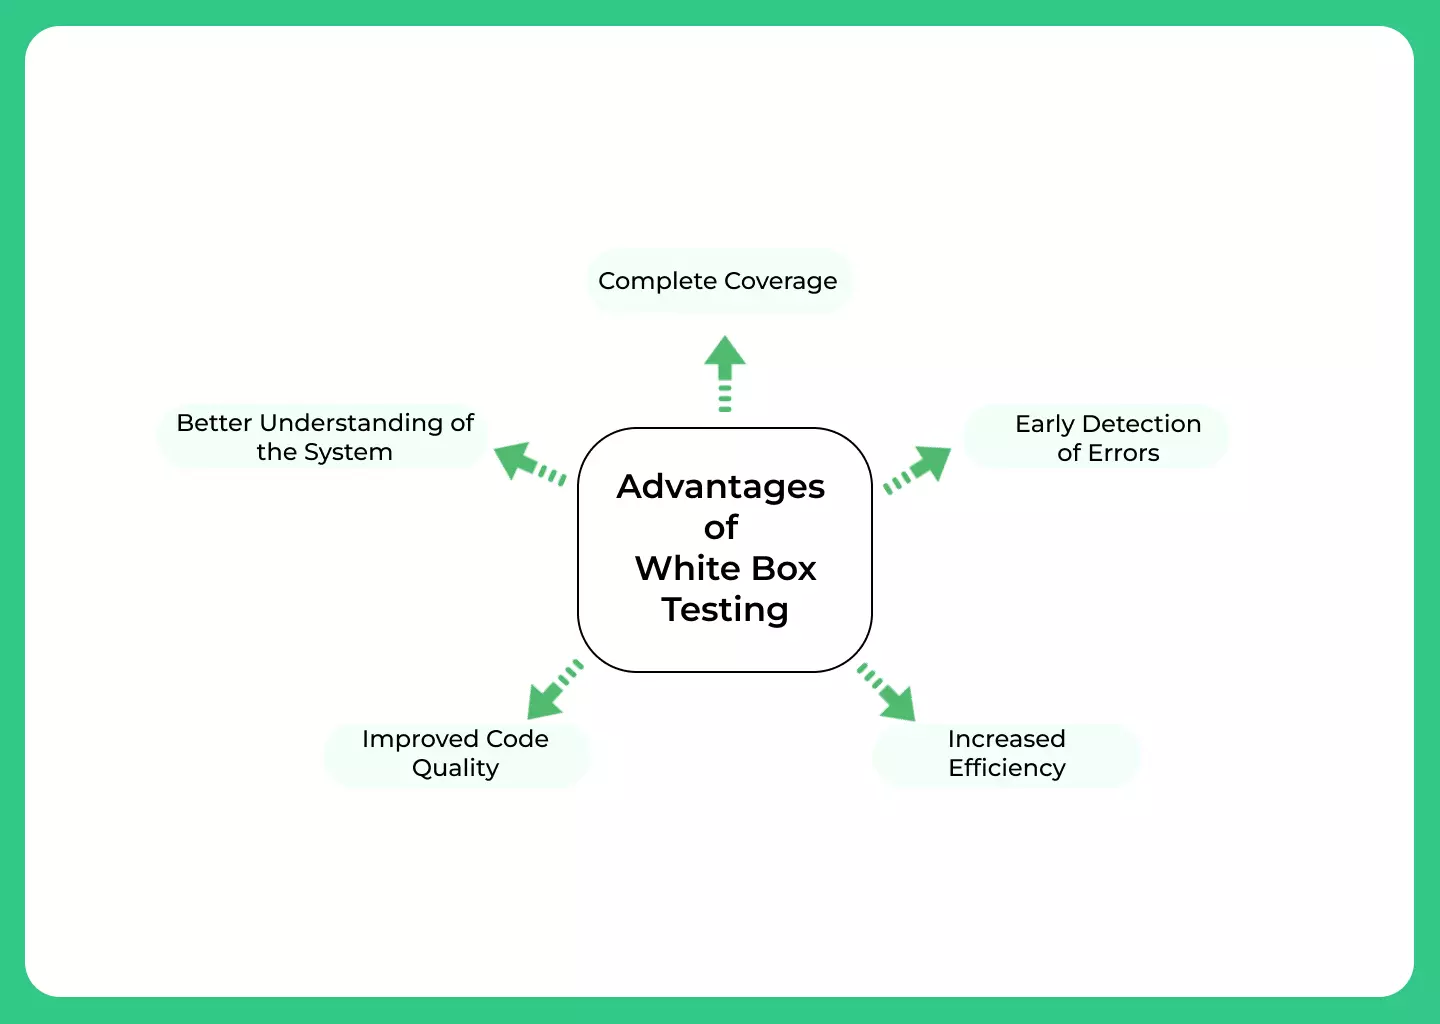 Advantages of White Box Testing